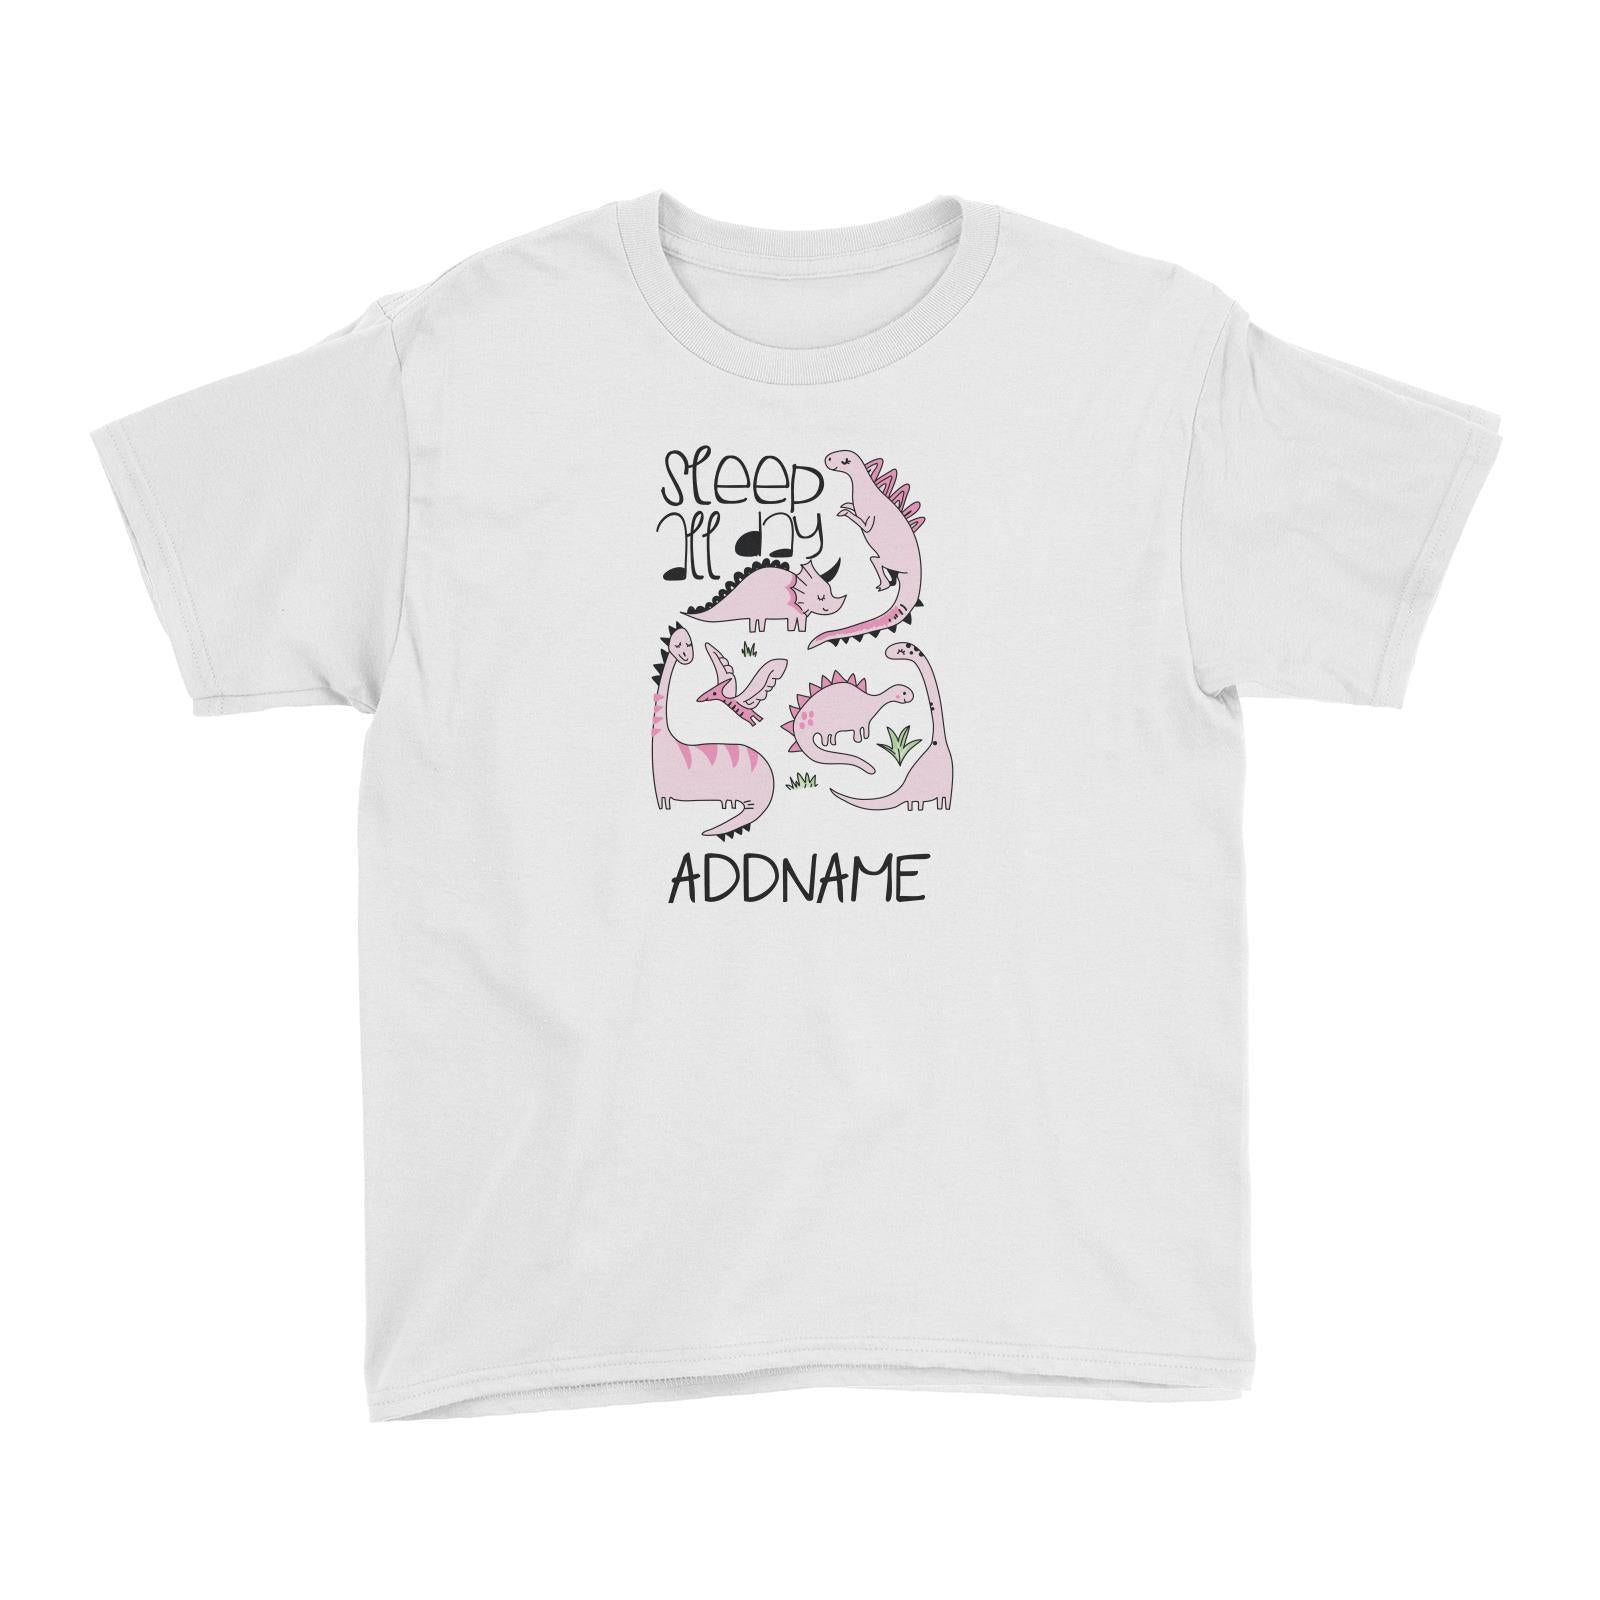 Cool Vibrant Series Sleep All Day Dinosaur Addname Kid's T-Shirt